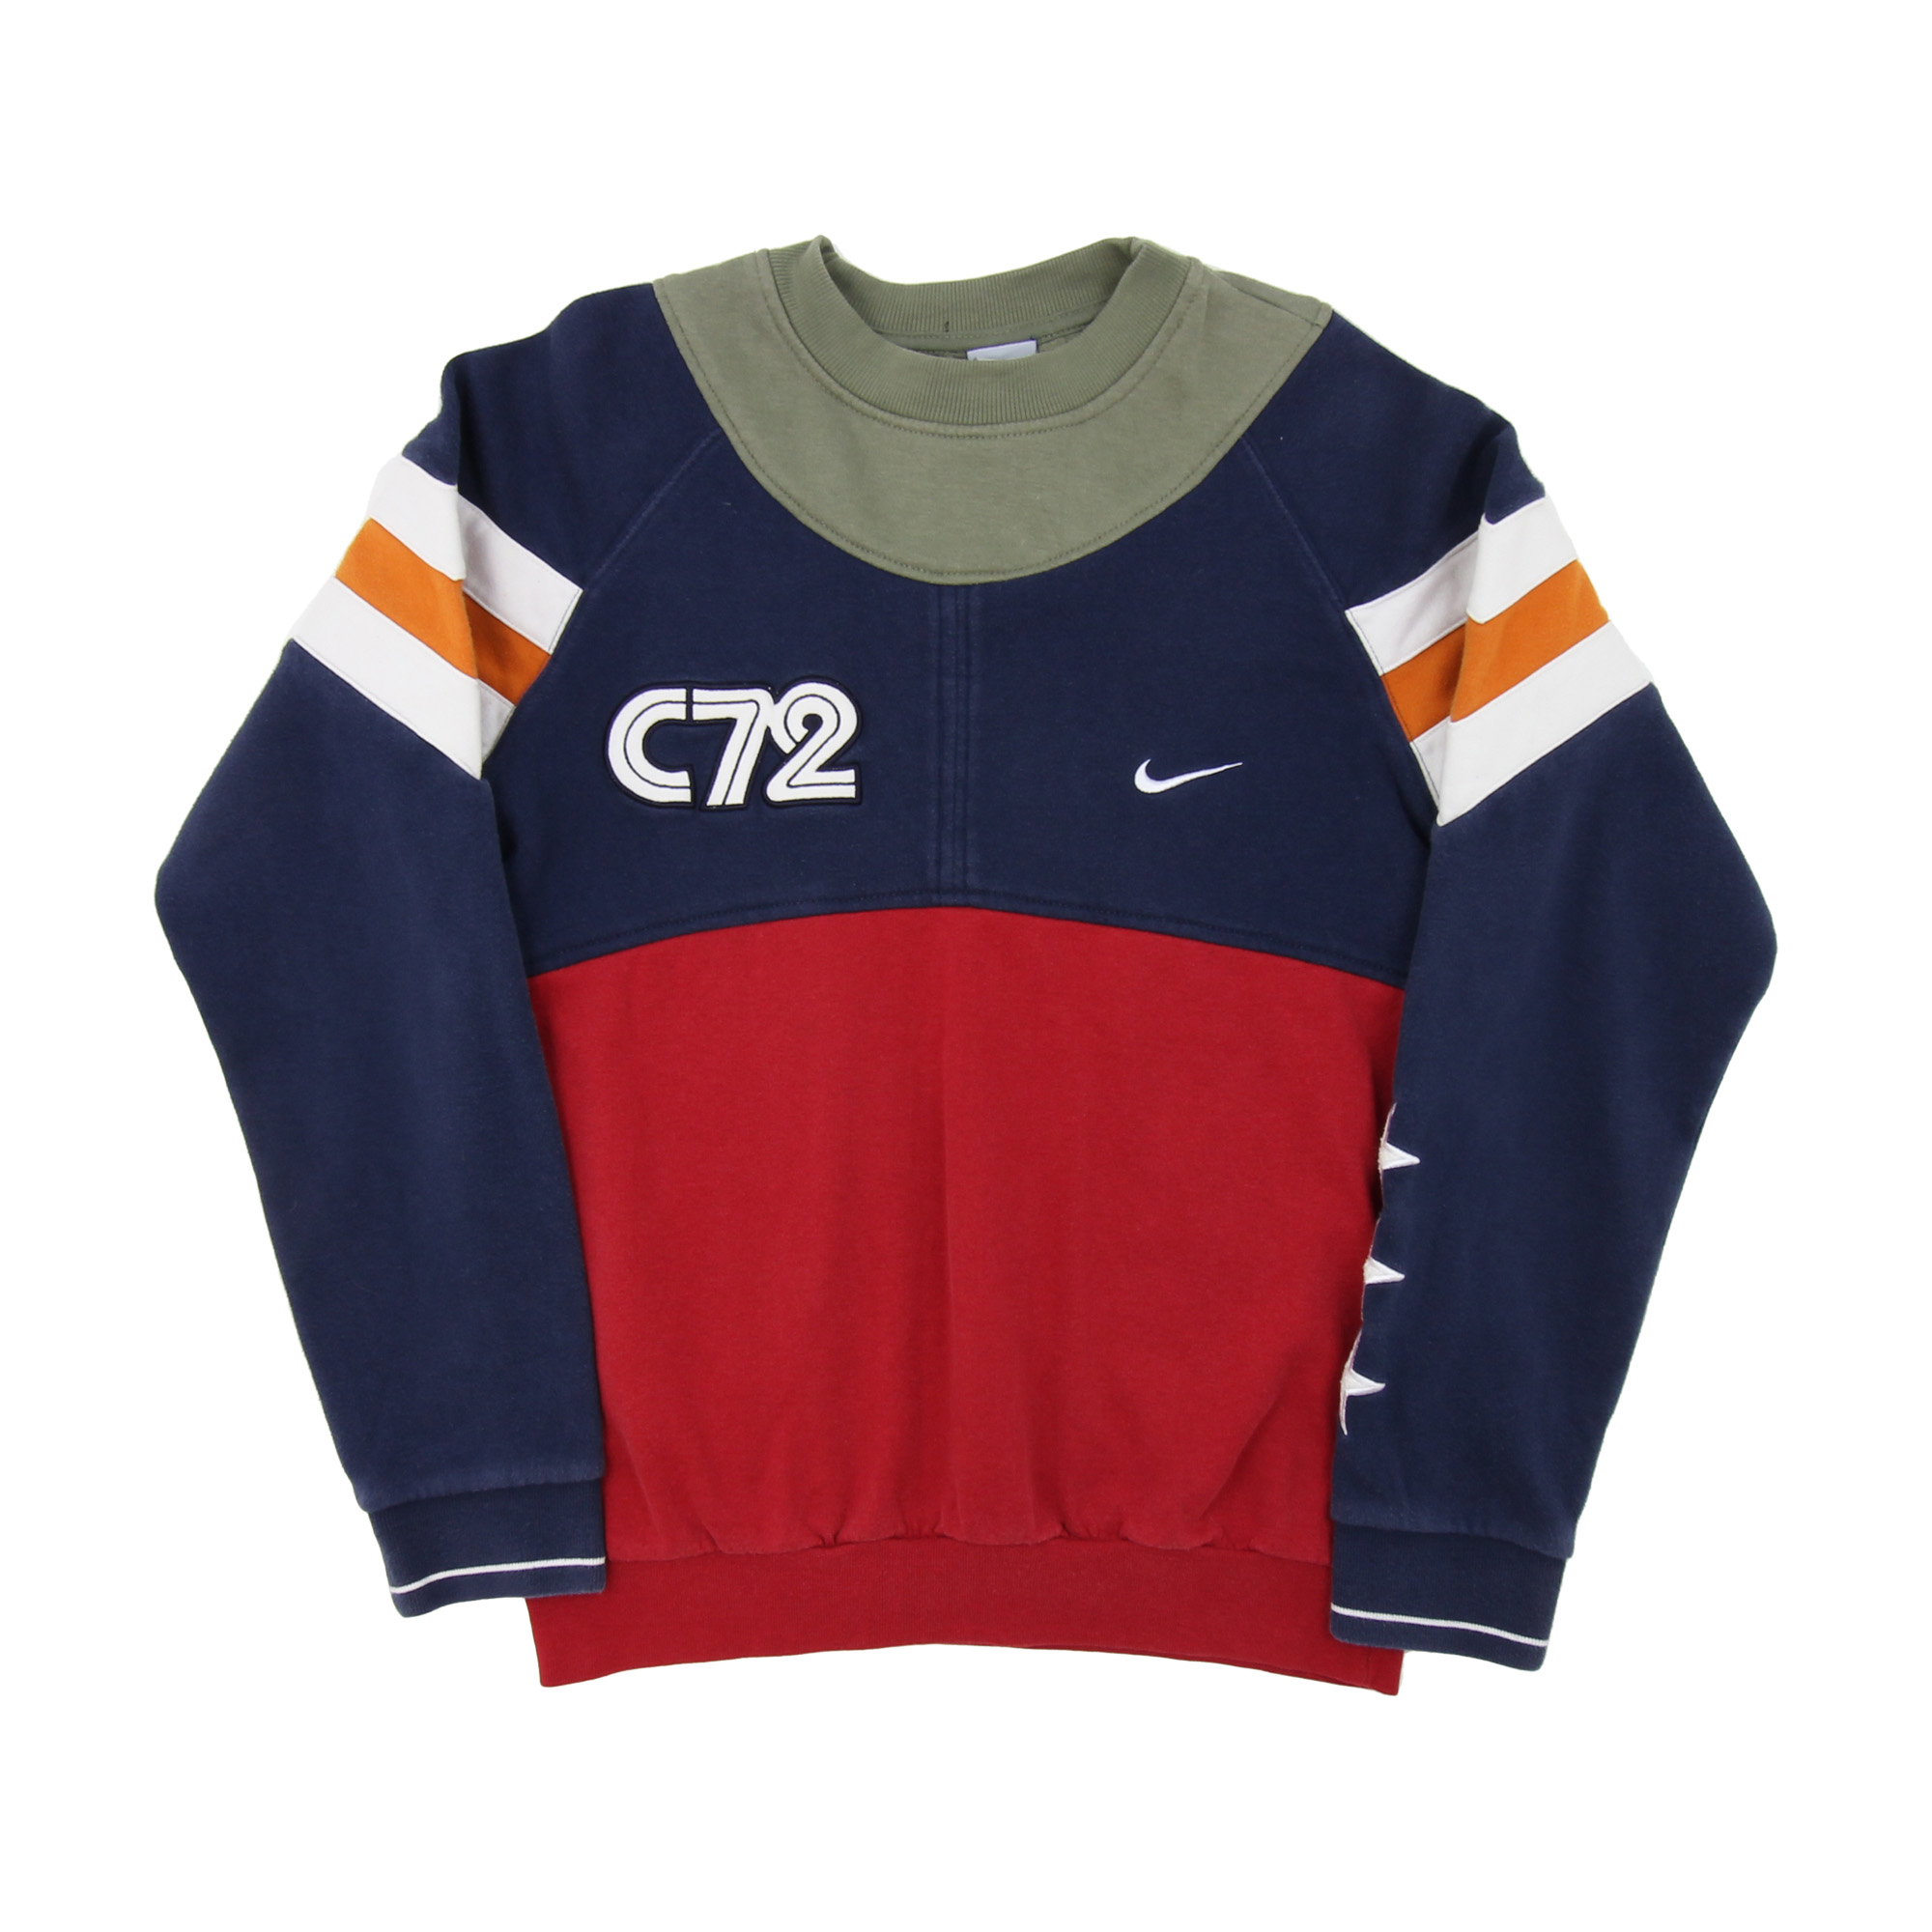 Nike C72 Rework Sweatshirt -  S/M